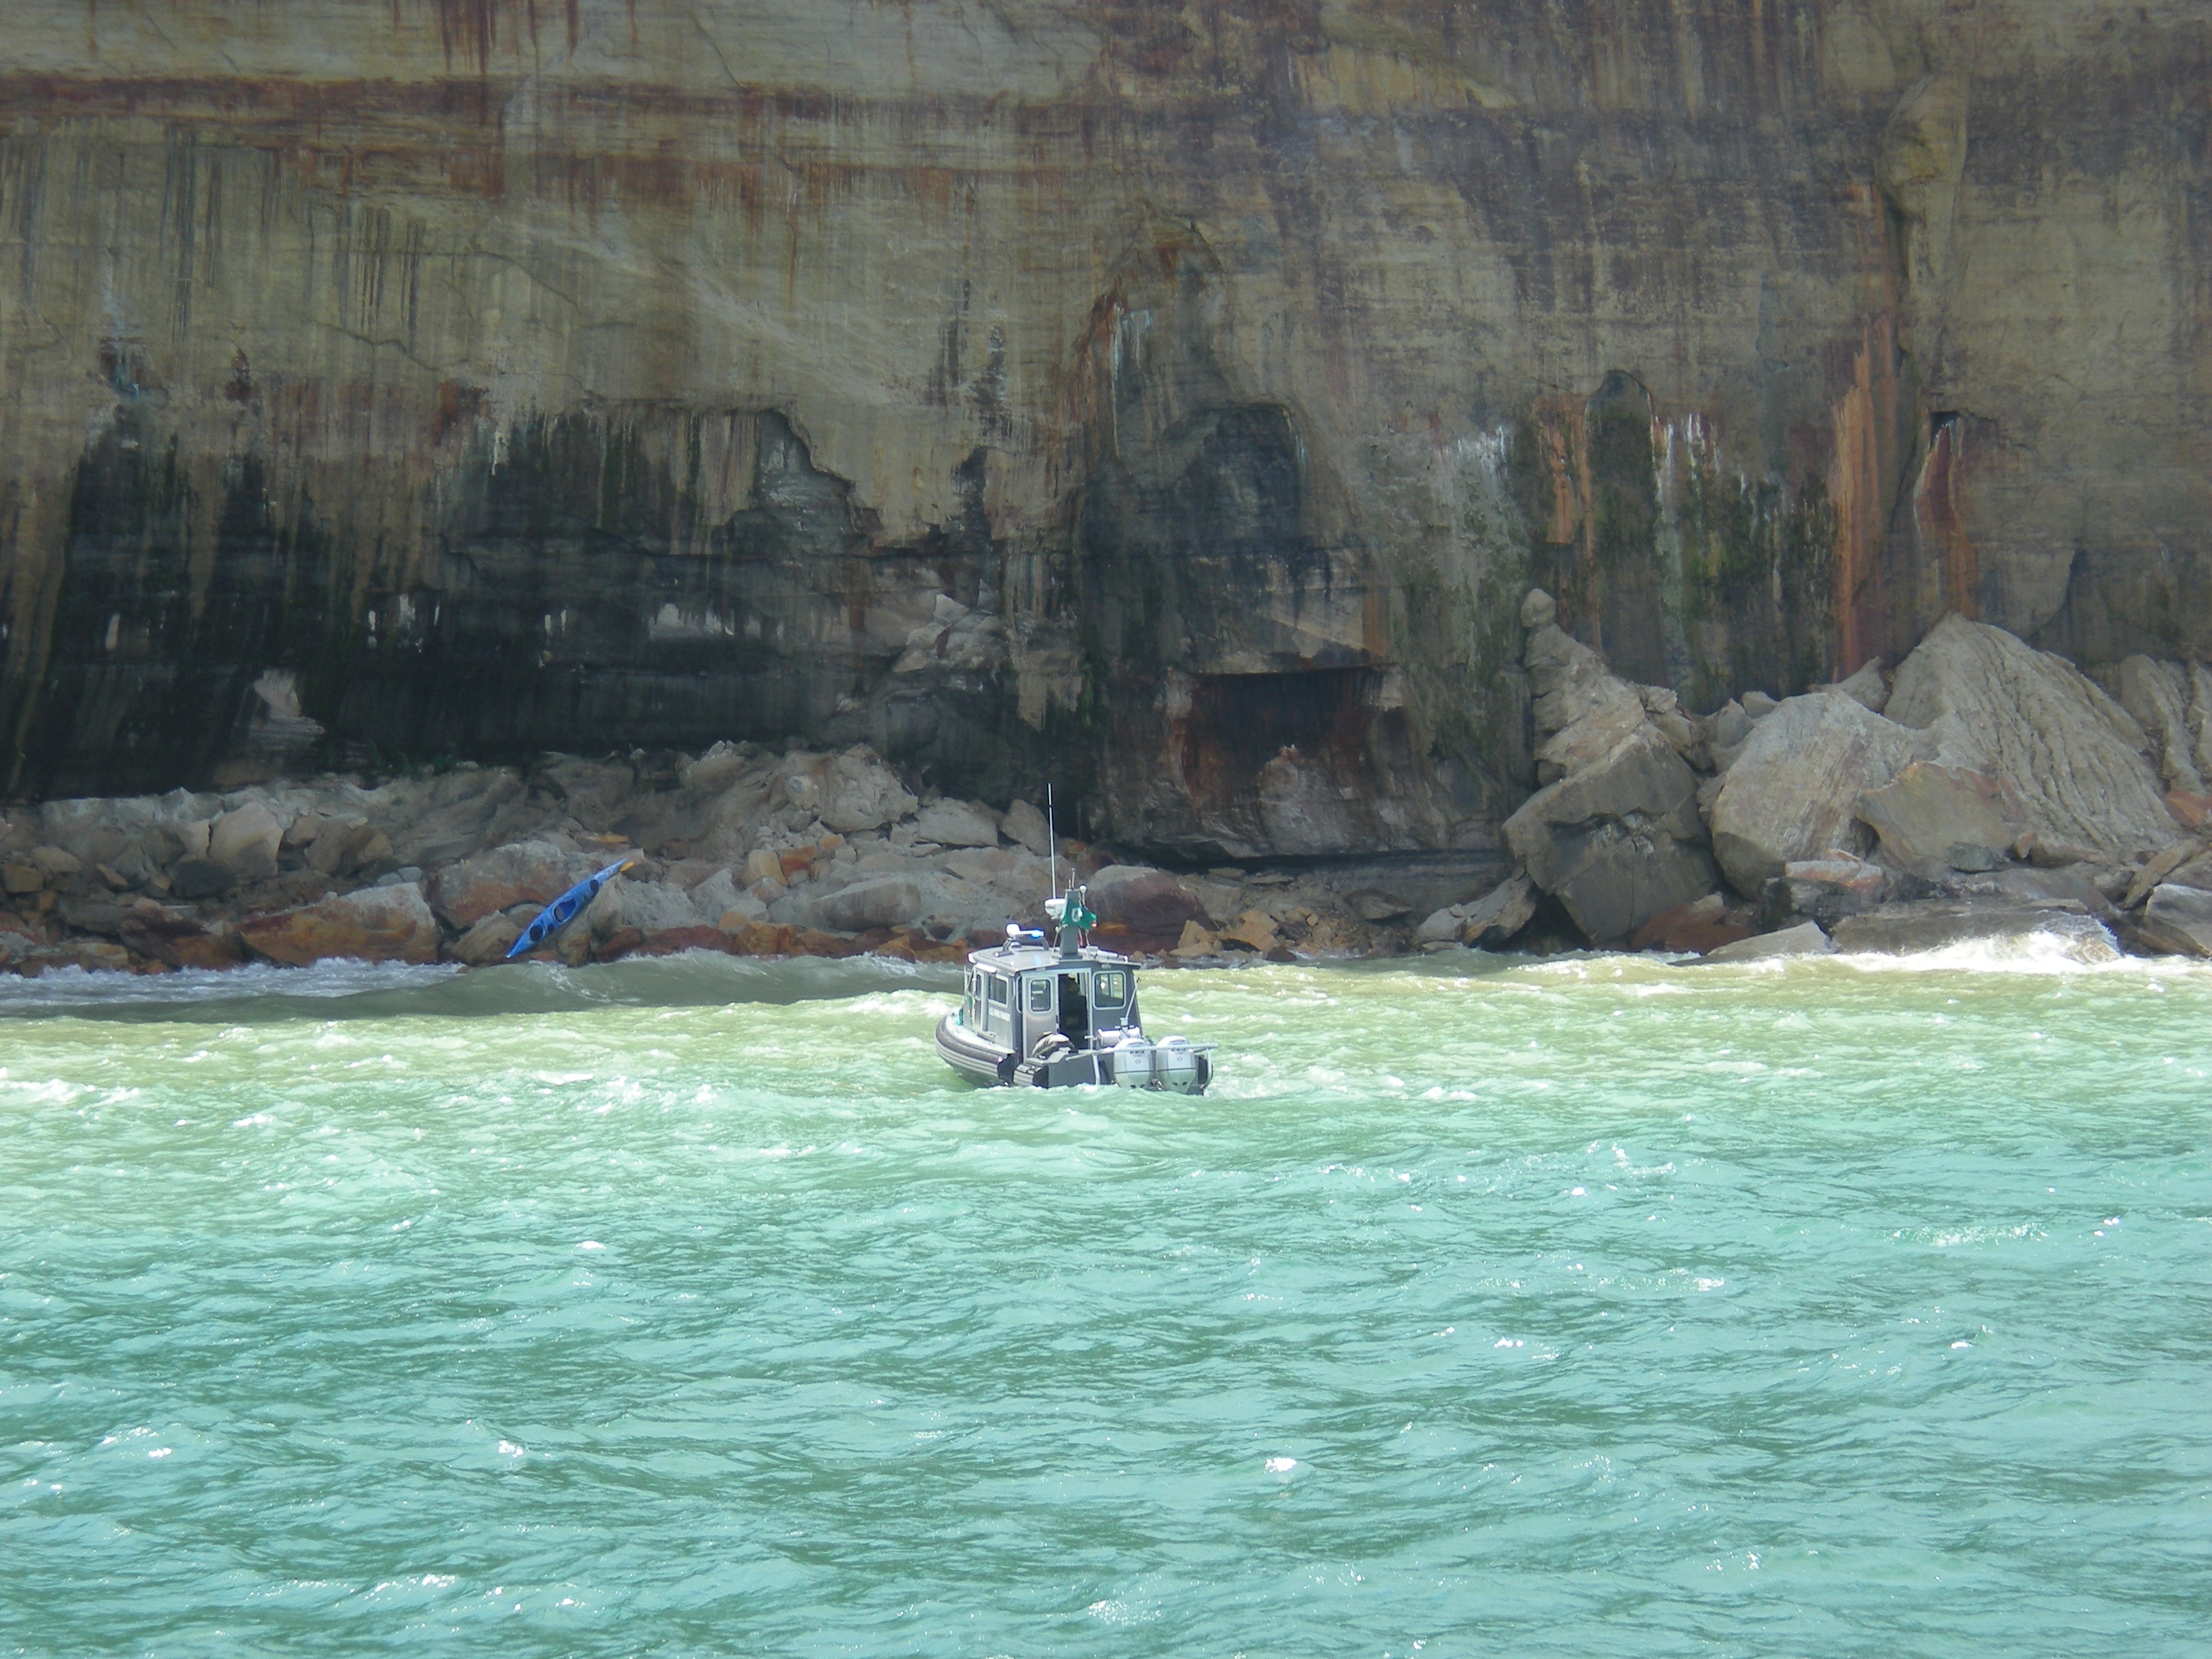 Kayak rescue along Pictured Rocks cliffs